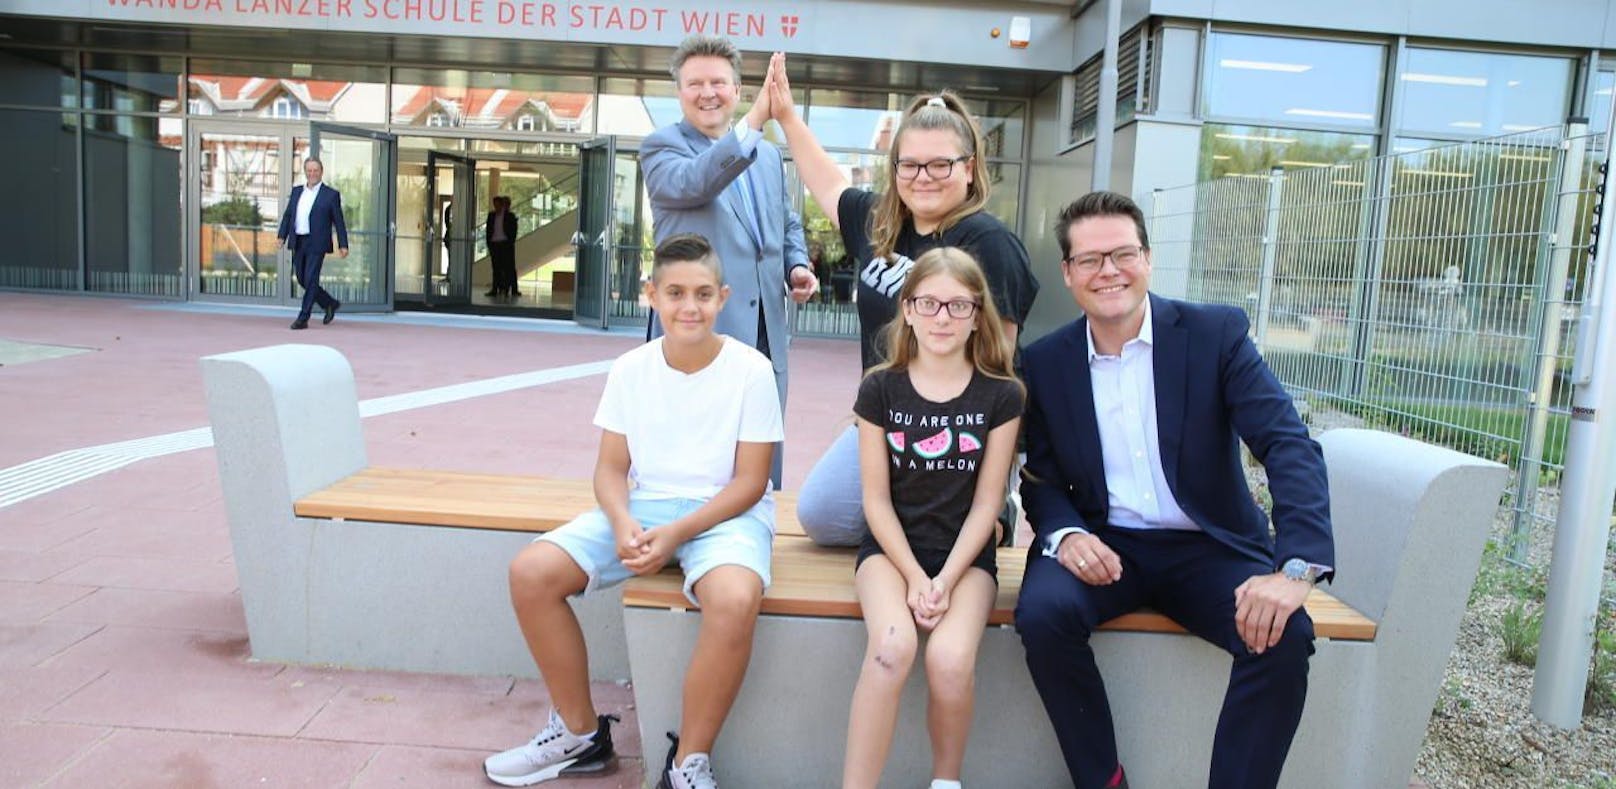 Bürgermeister Michael Ludwig (SPÖ) und Bildungsstadtrat Jürgen Czernohorszky mit Kids vor der &quot;Wanda-Lanzer-Schule&quot; in Floridsdorf. 